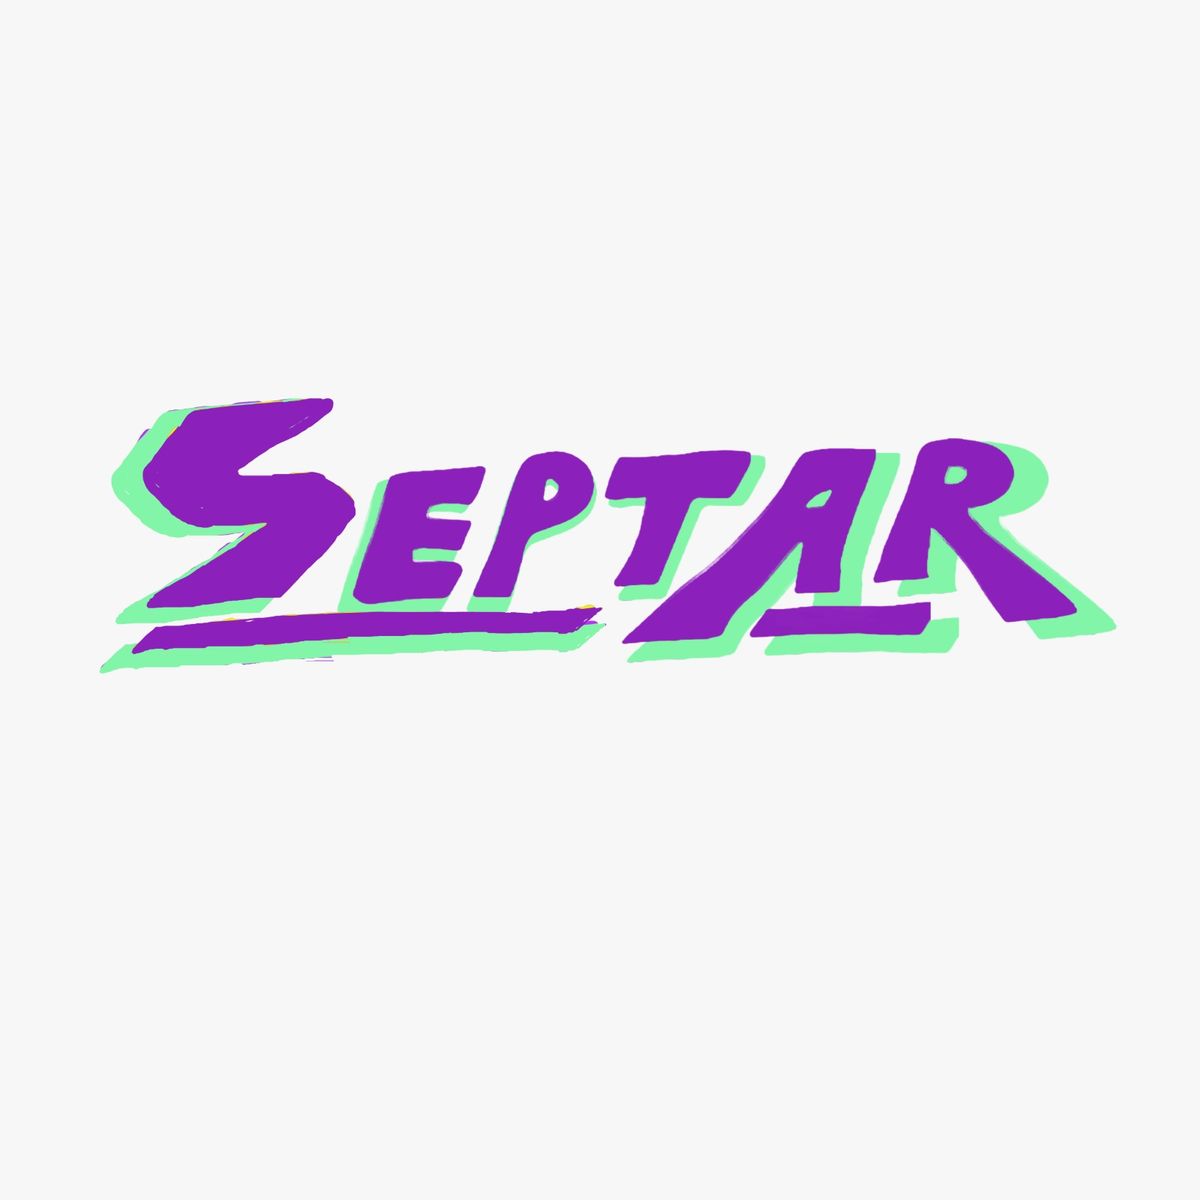 Septar Presents: Let That Sink In